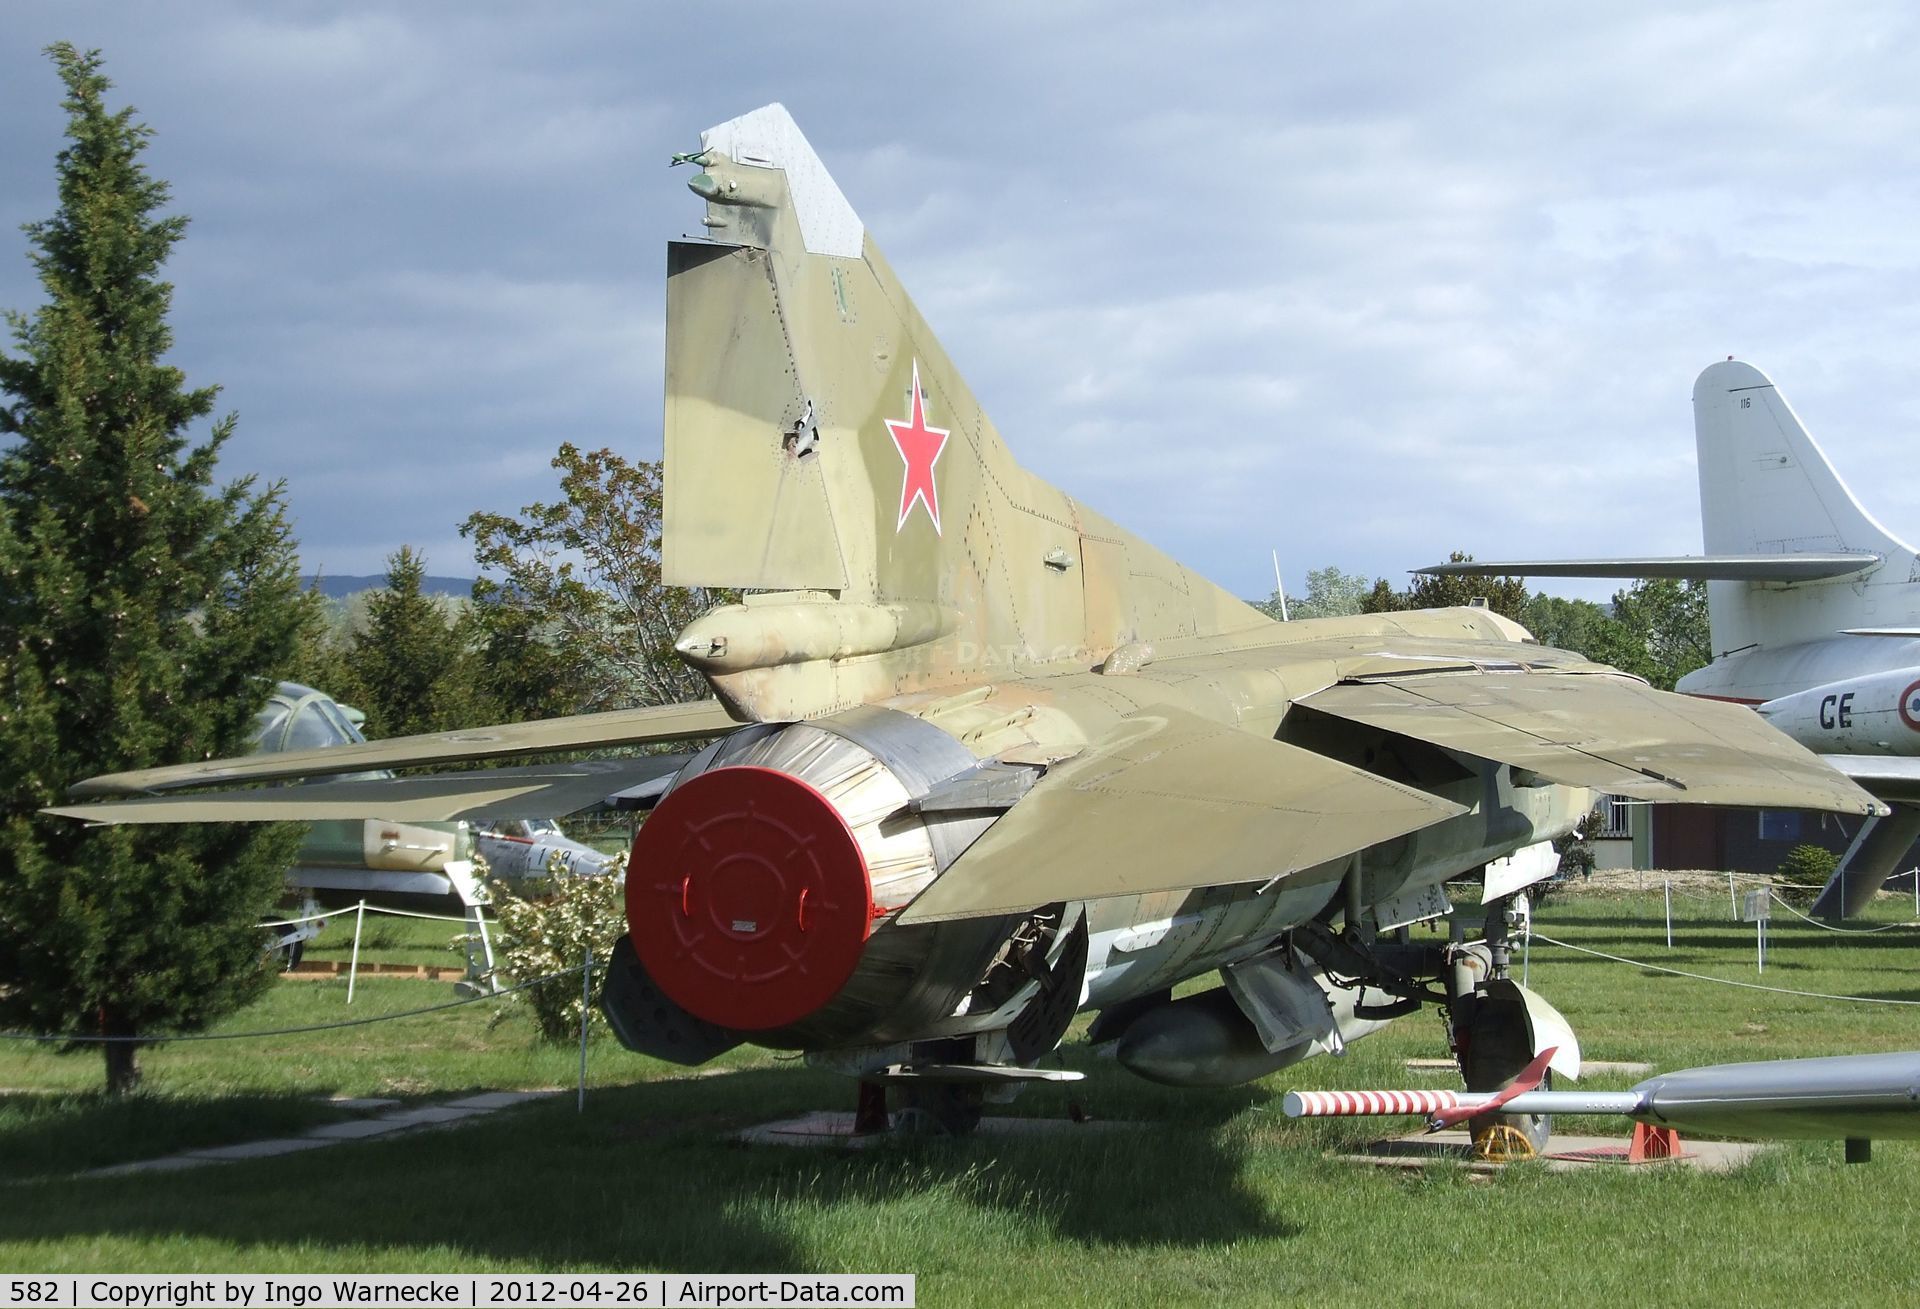 582, 1973 Mikoyan-Gurevich MiG-23MF C/N 039021, Mikoyan i Gurevich MiG-23MF FLOGGER-B at the Musée Européen de l'Aviation de Chasse, Montelimar Ancone airfield